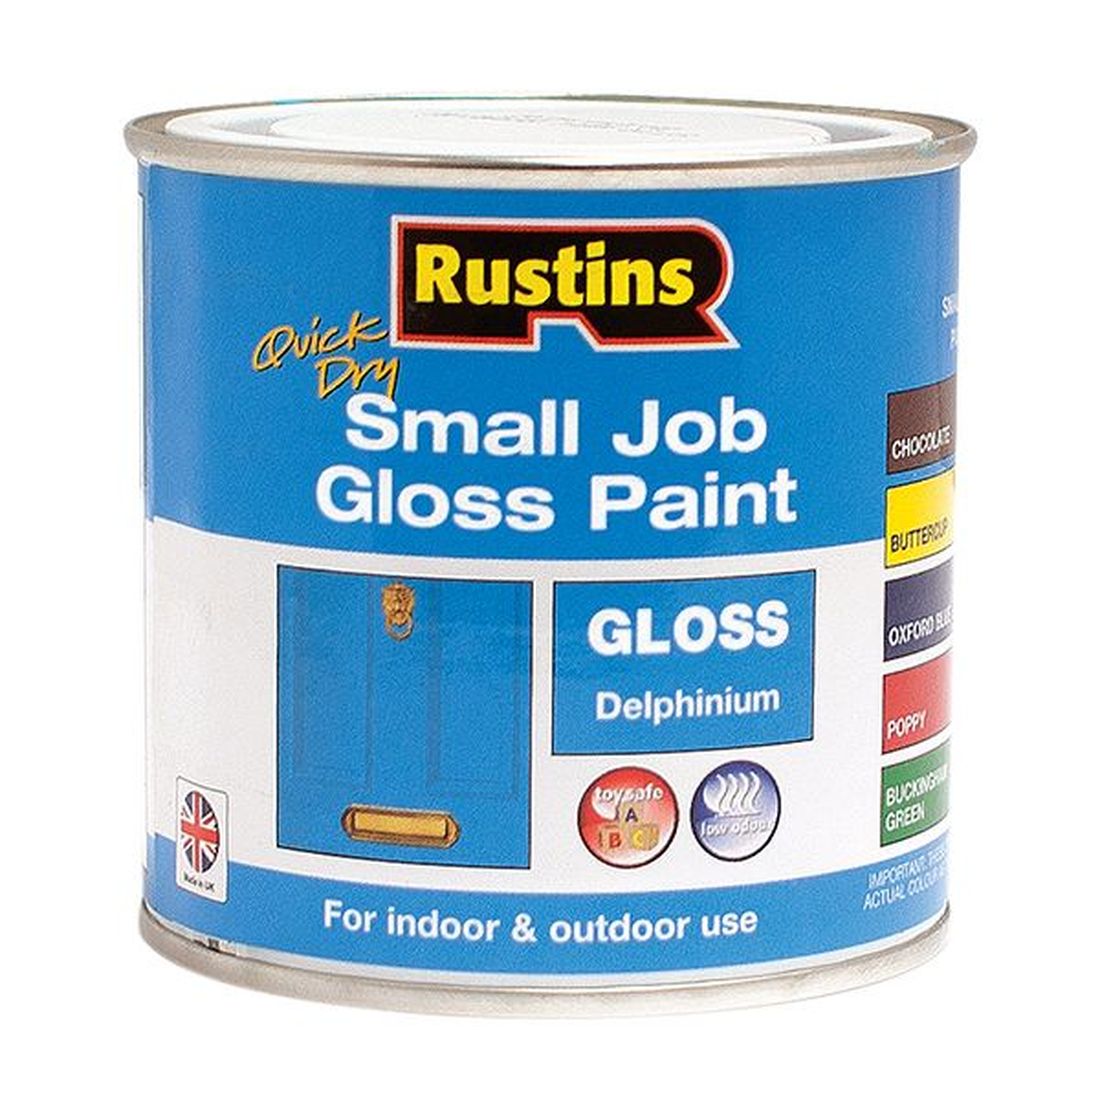 Rustins Quick Dry Small Job Gloss Paint Delphinium 250ml                                